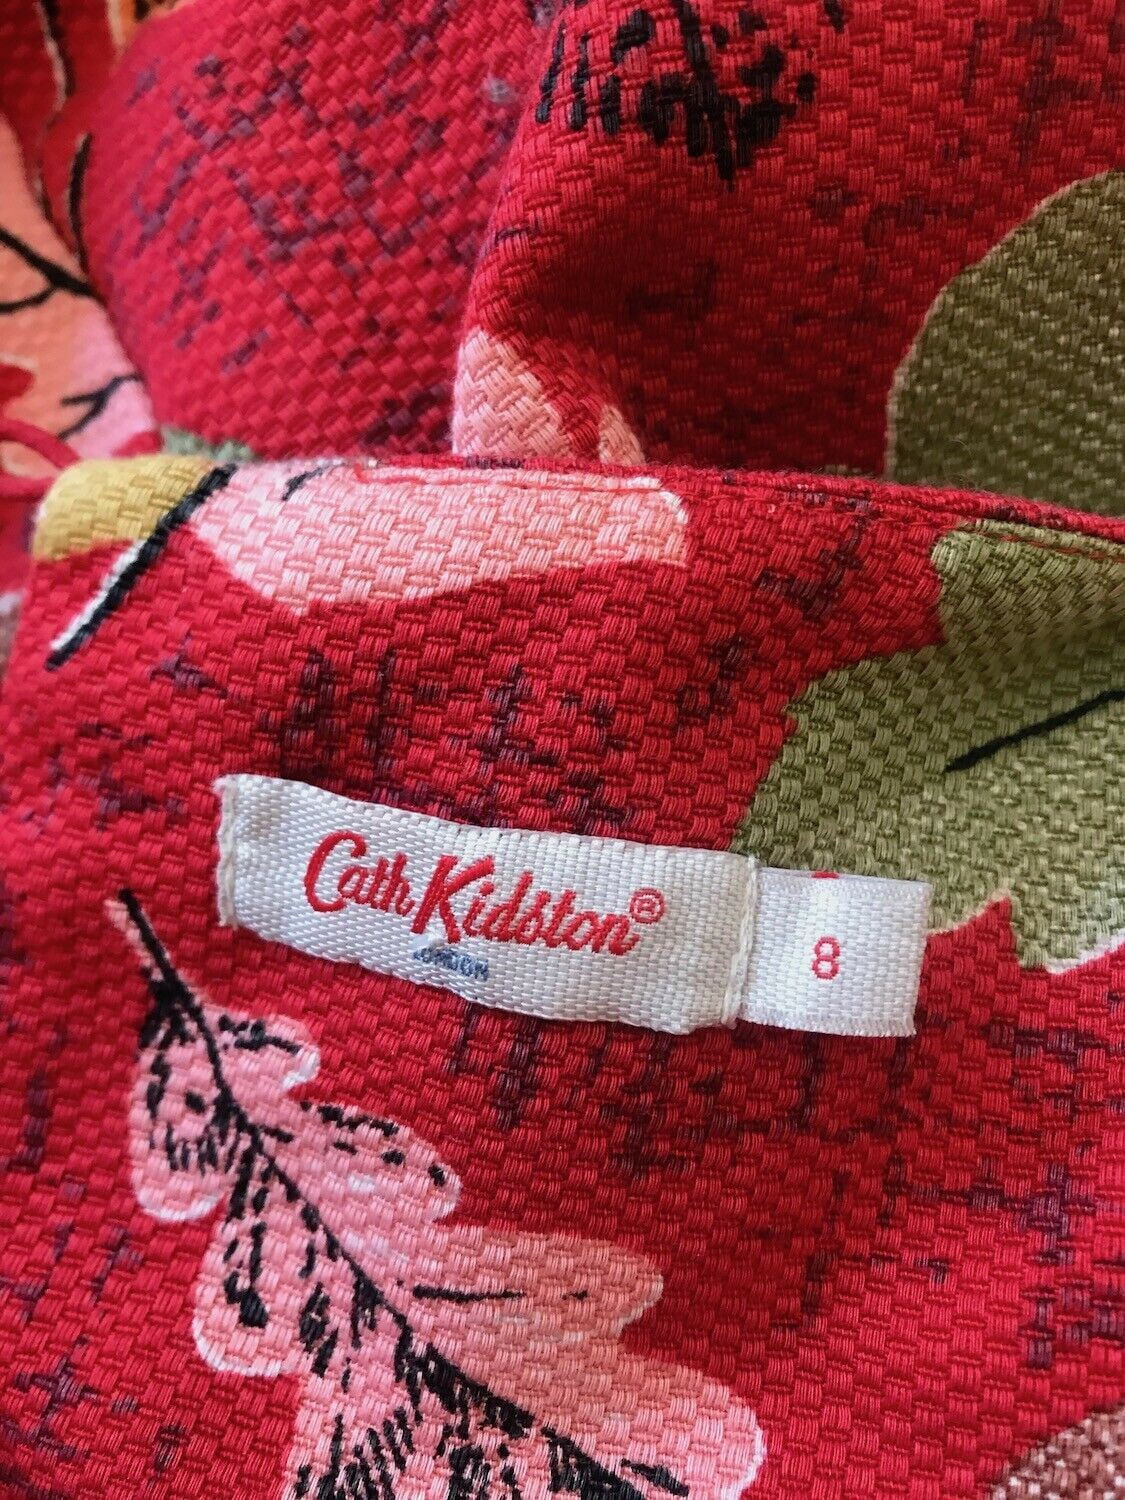 Cath Kidston Women's Red Leaf Print Cotton Dress UK 8 US 4 EU 36 Timeless Fashions